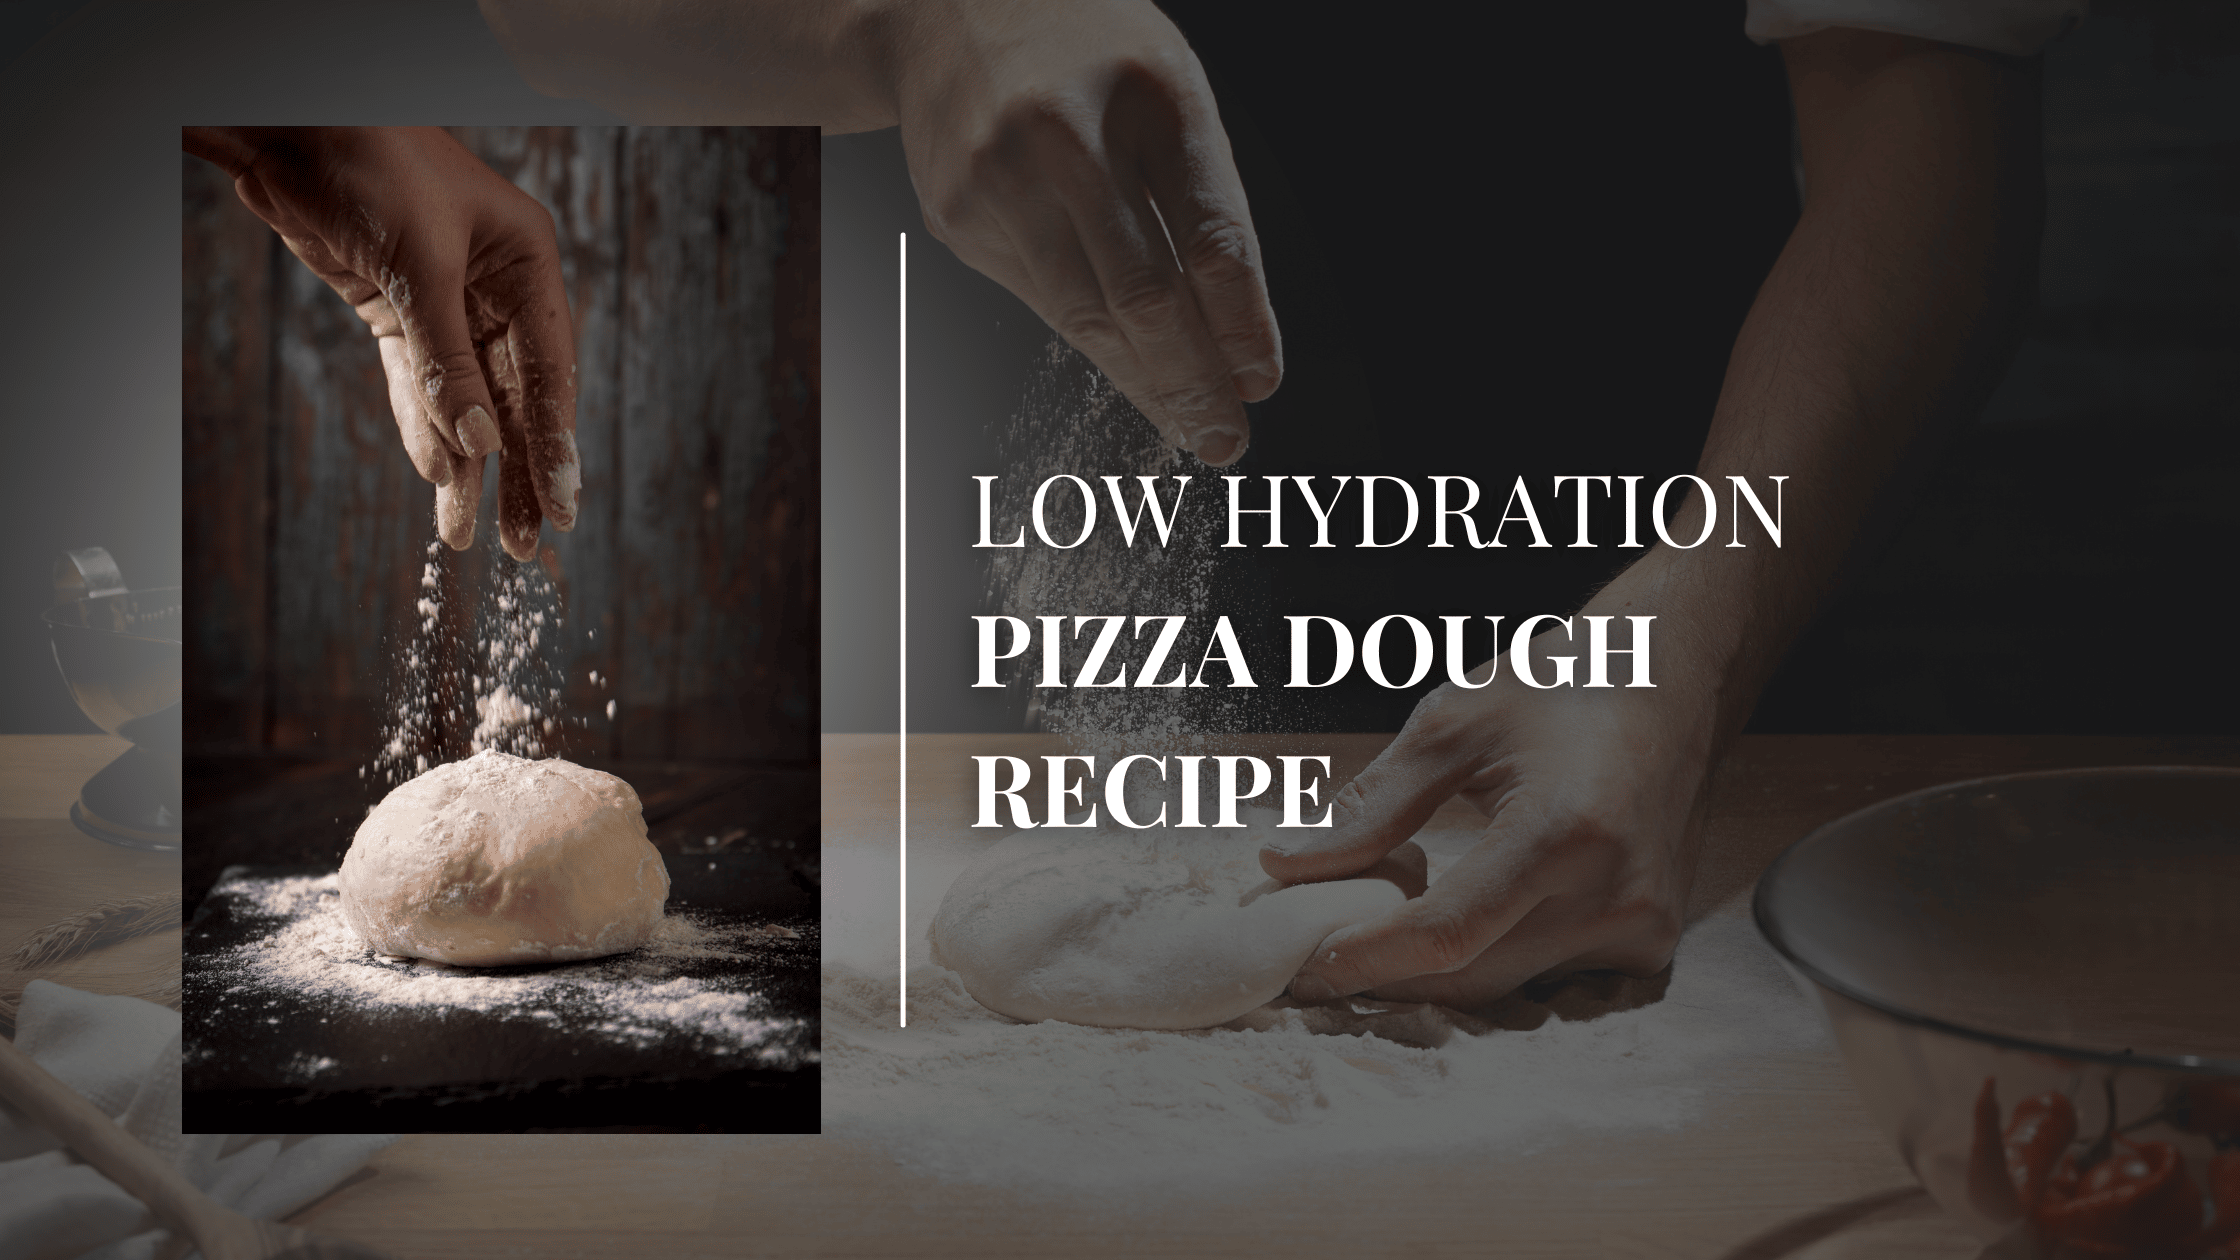 Low hydration pizza dough recipe